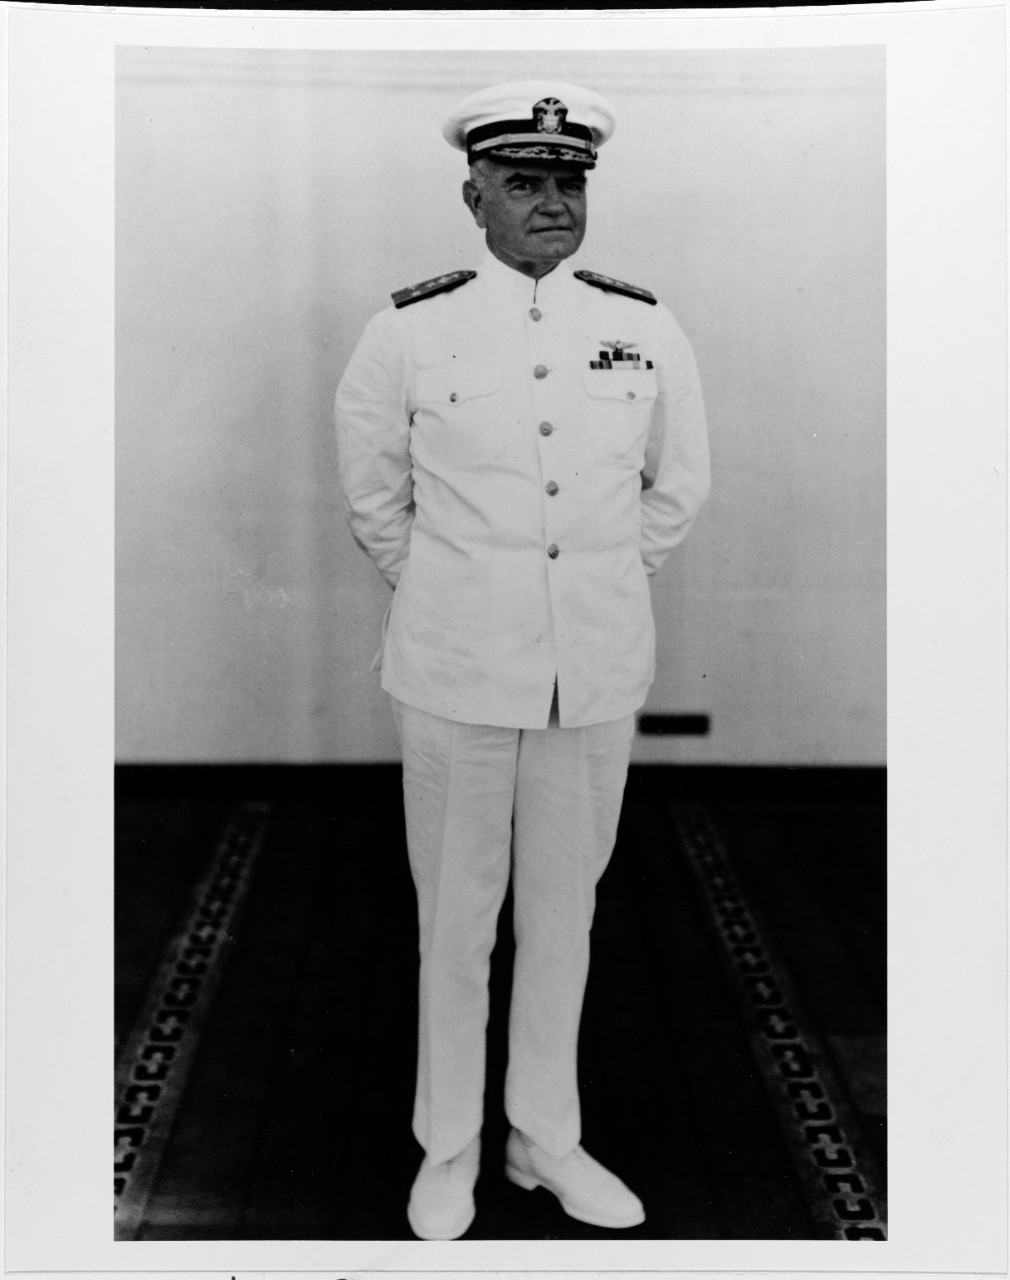 Vice Admiral William F. Halsey